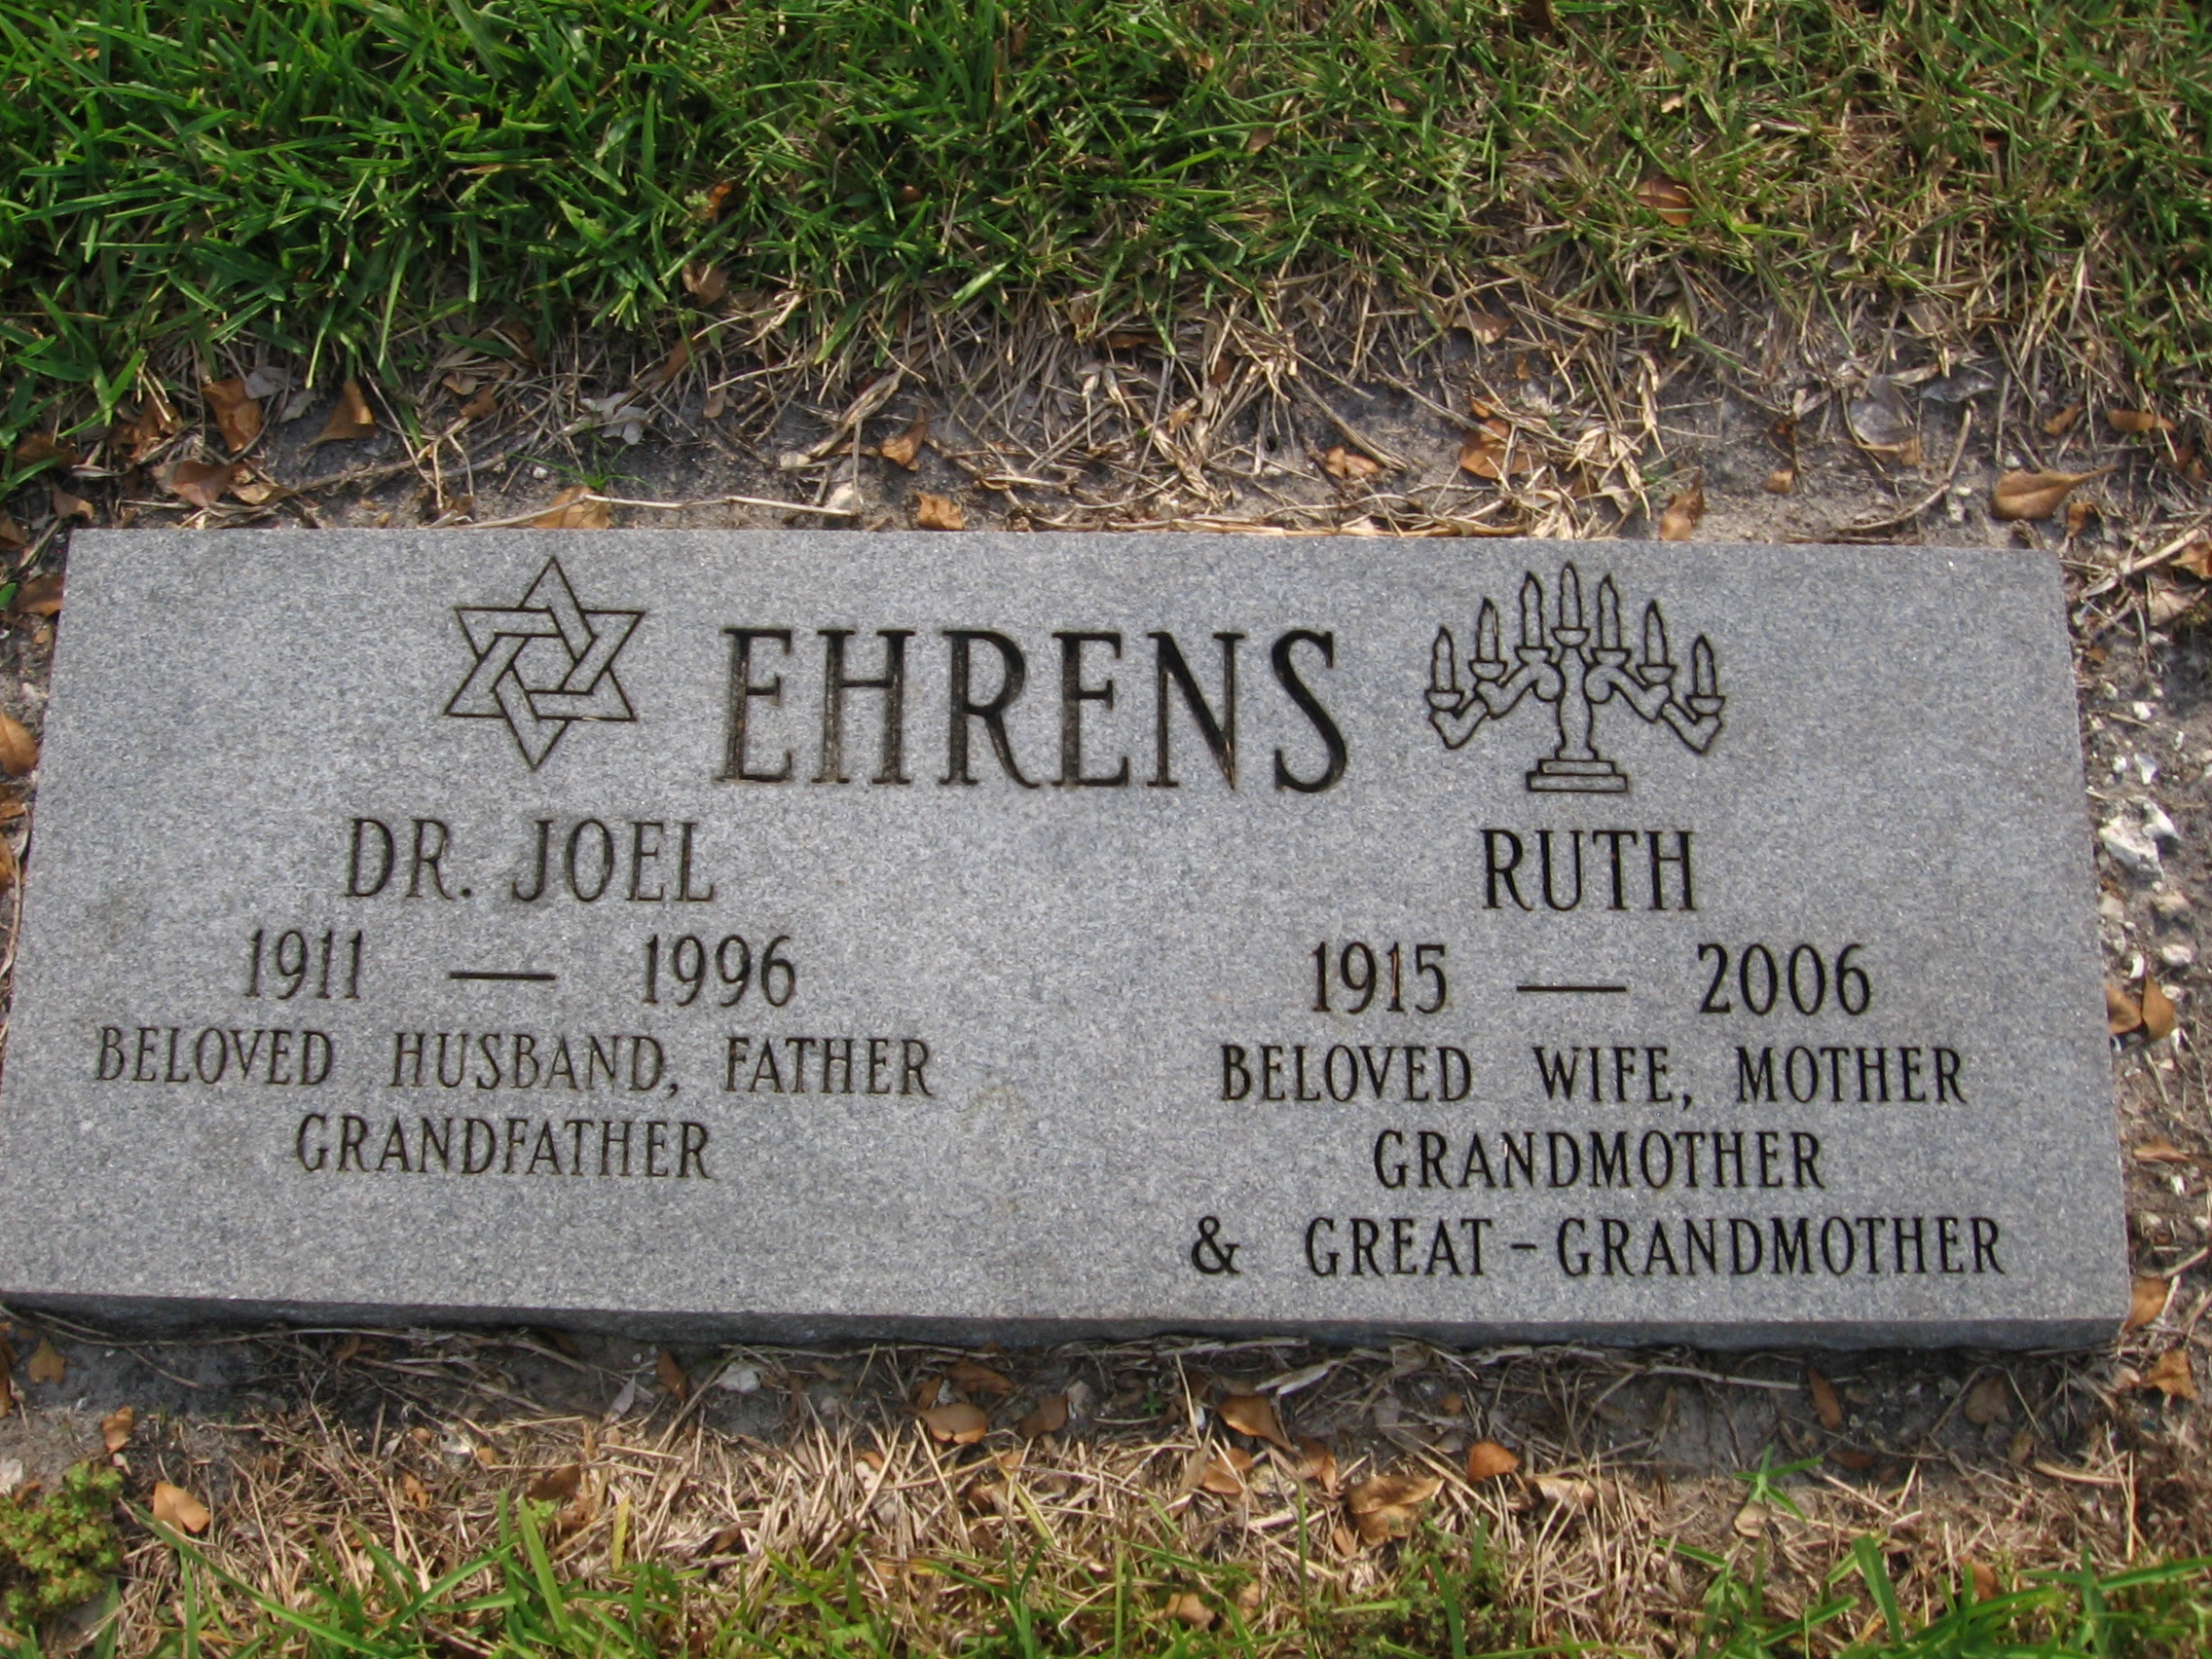 Dr Joel Ehrens